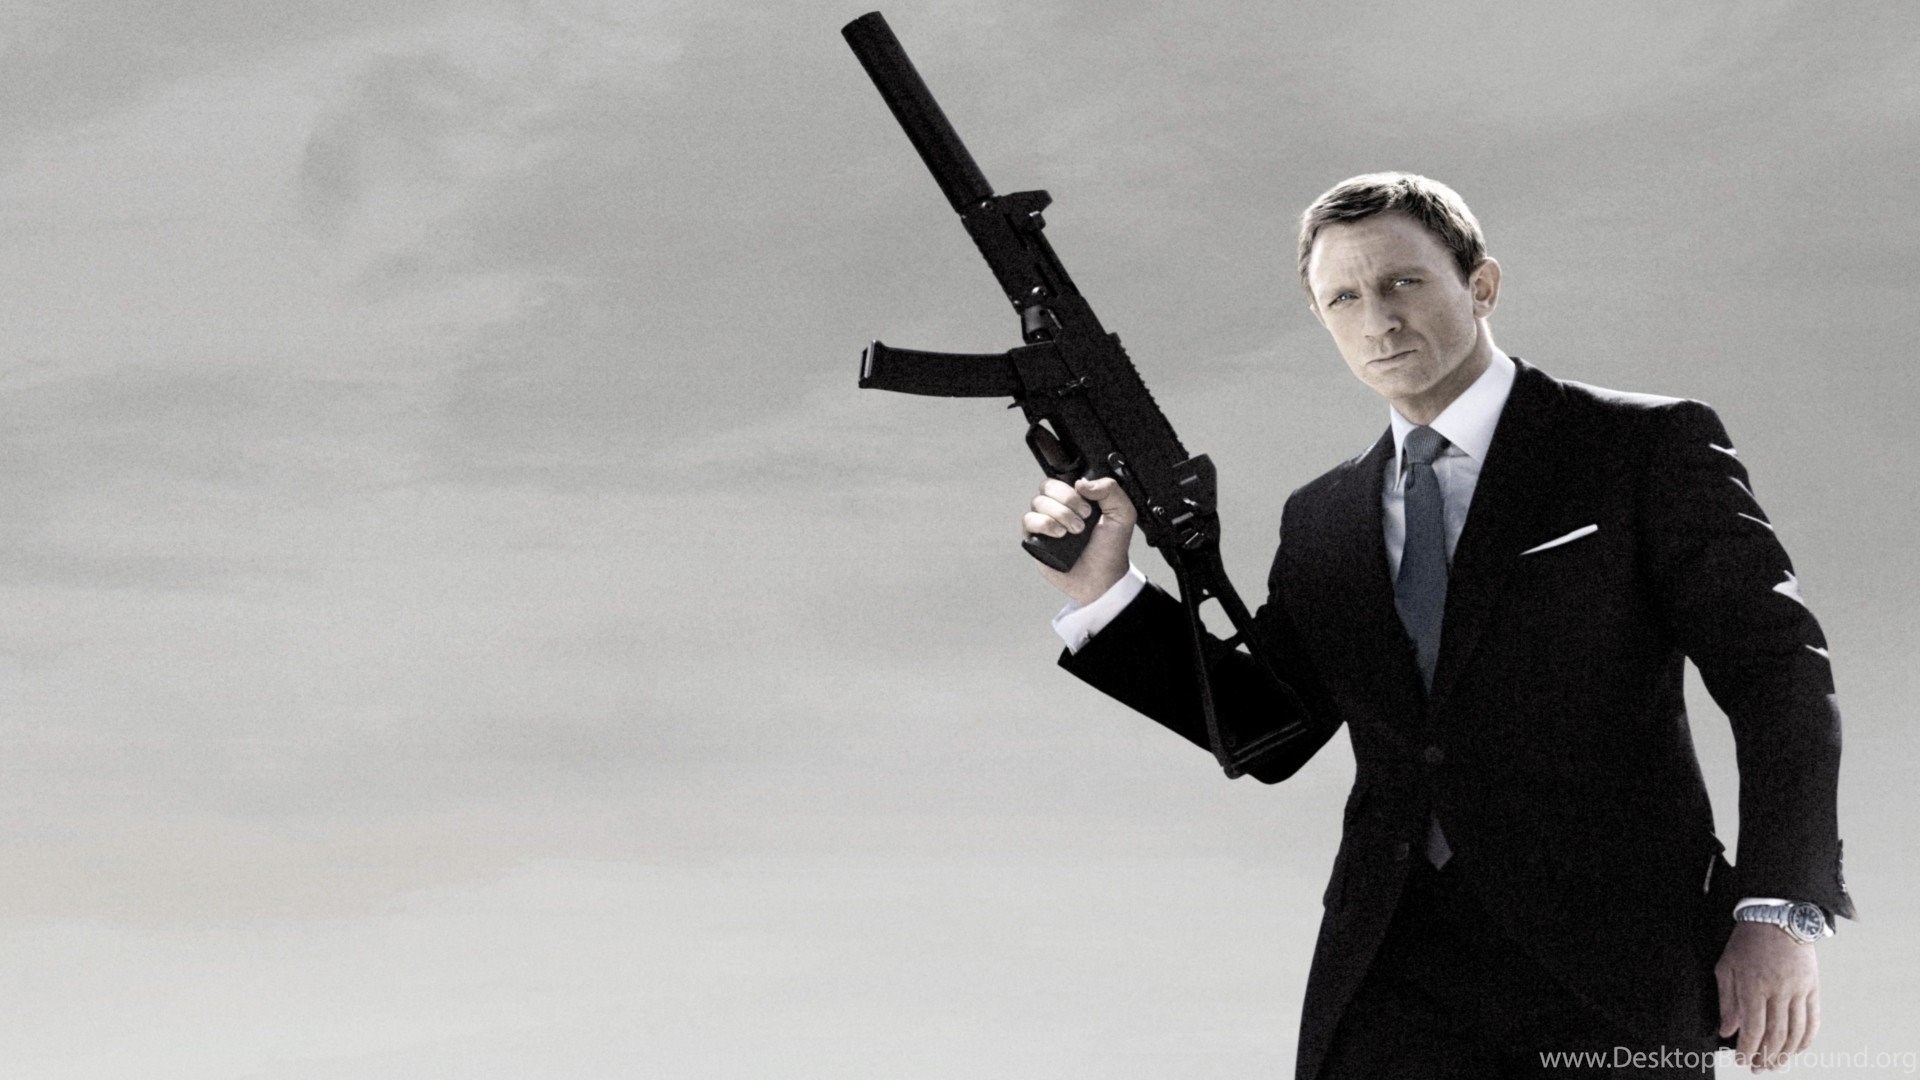 Кинотик бонд. Агент 007 Дэниел Крейг. Дэниел Крейг 007. Дэниел Крейг 007 Квант милосердия.